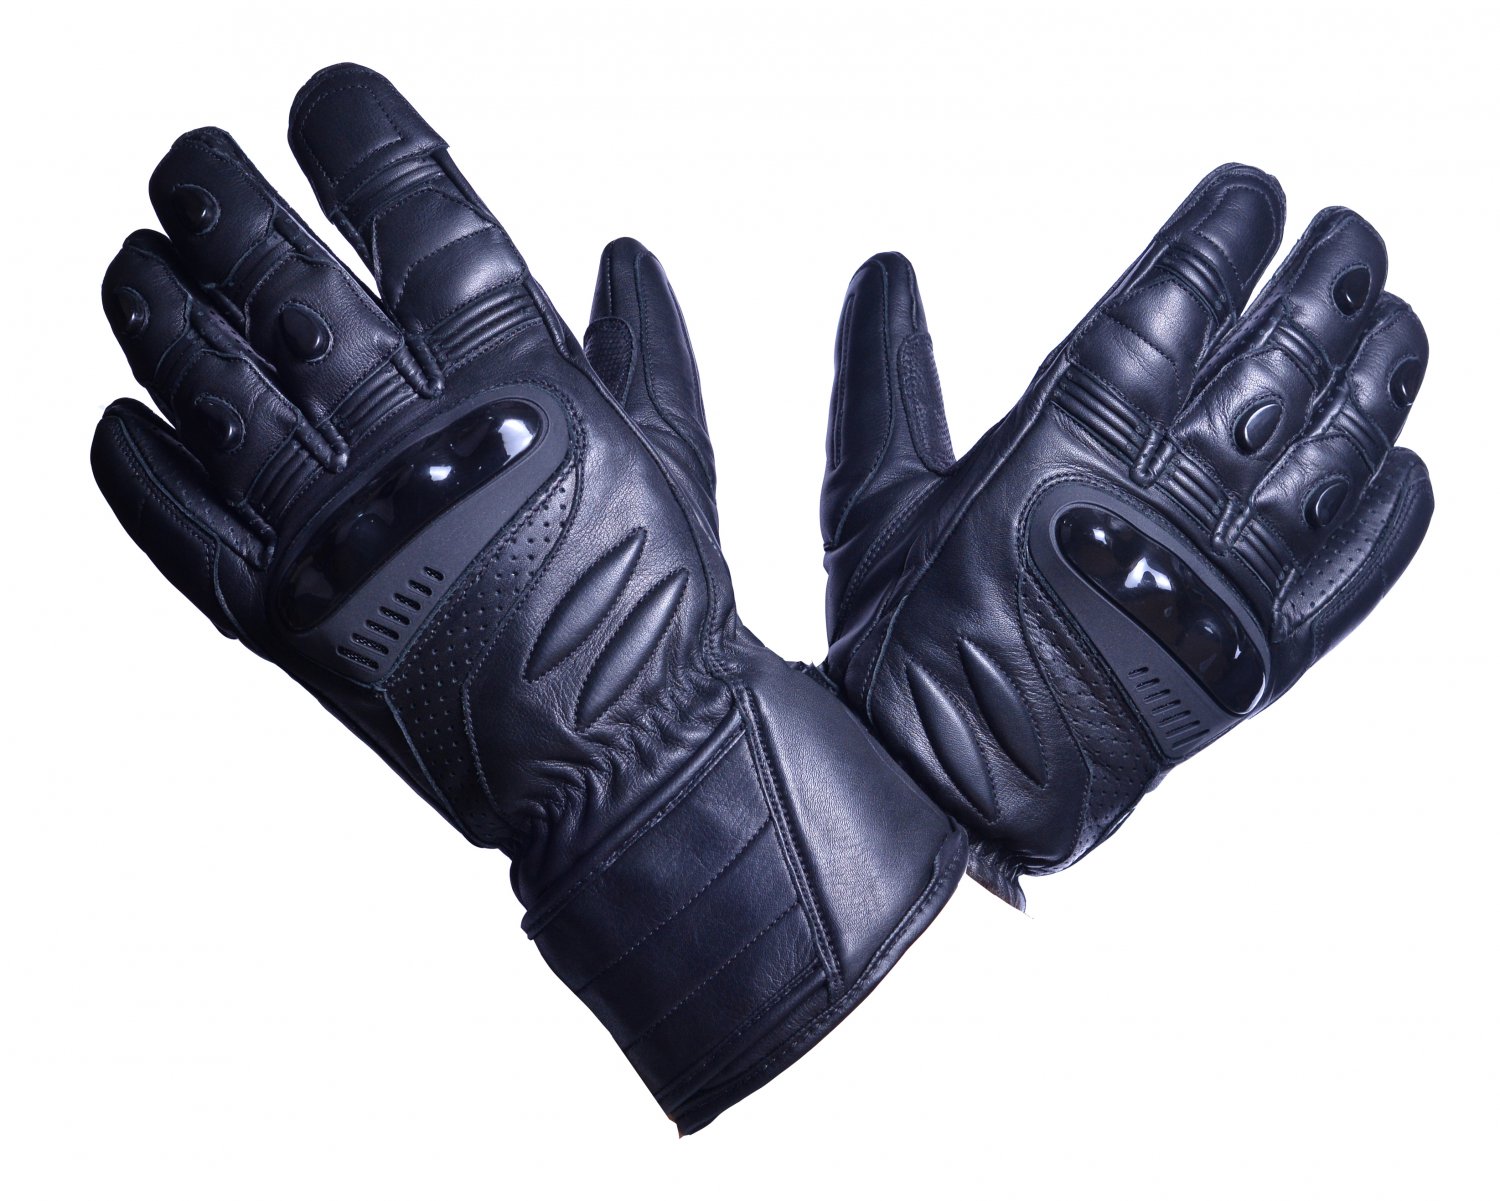 MOTOR-BIKE RACING Safety GLOVES Genuine Leather Black Color Size 3XL